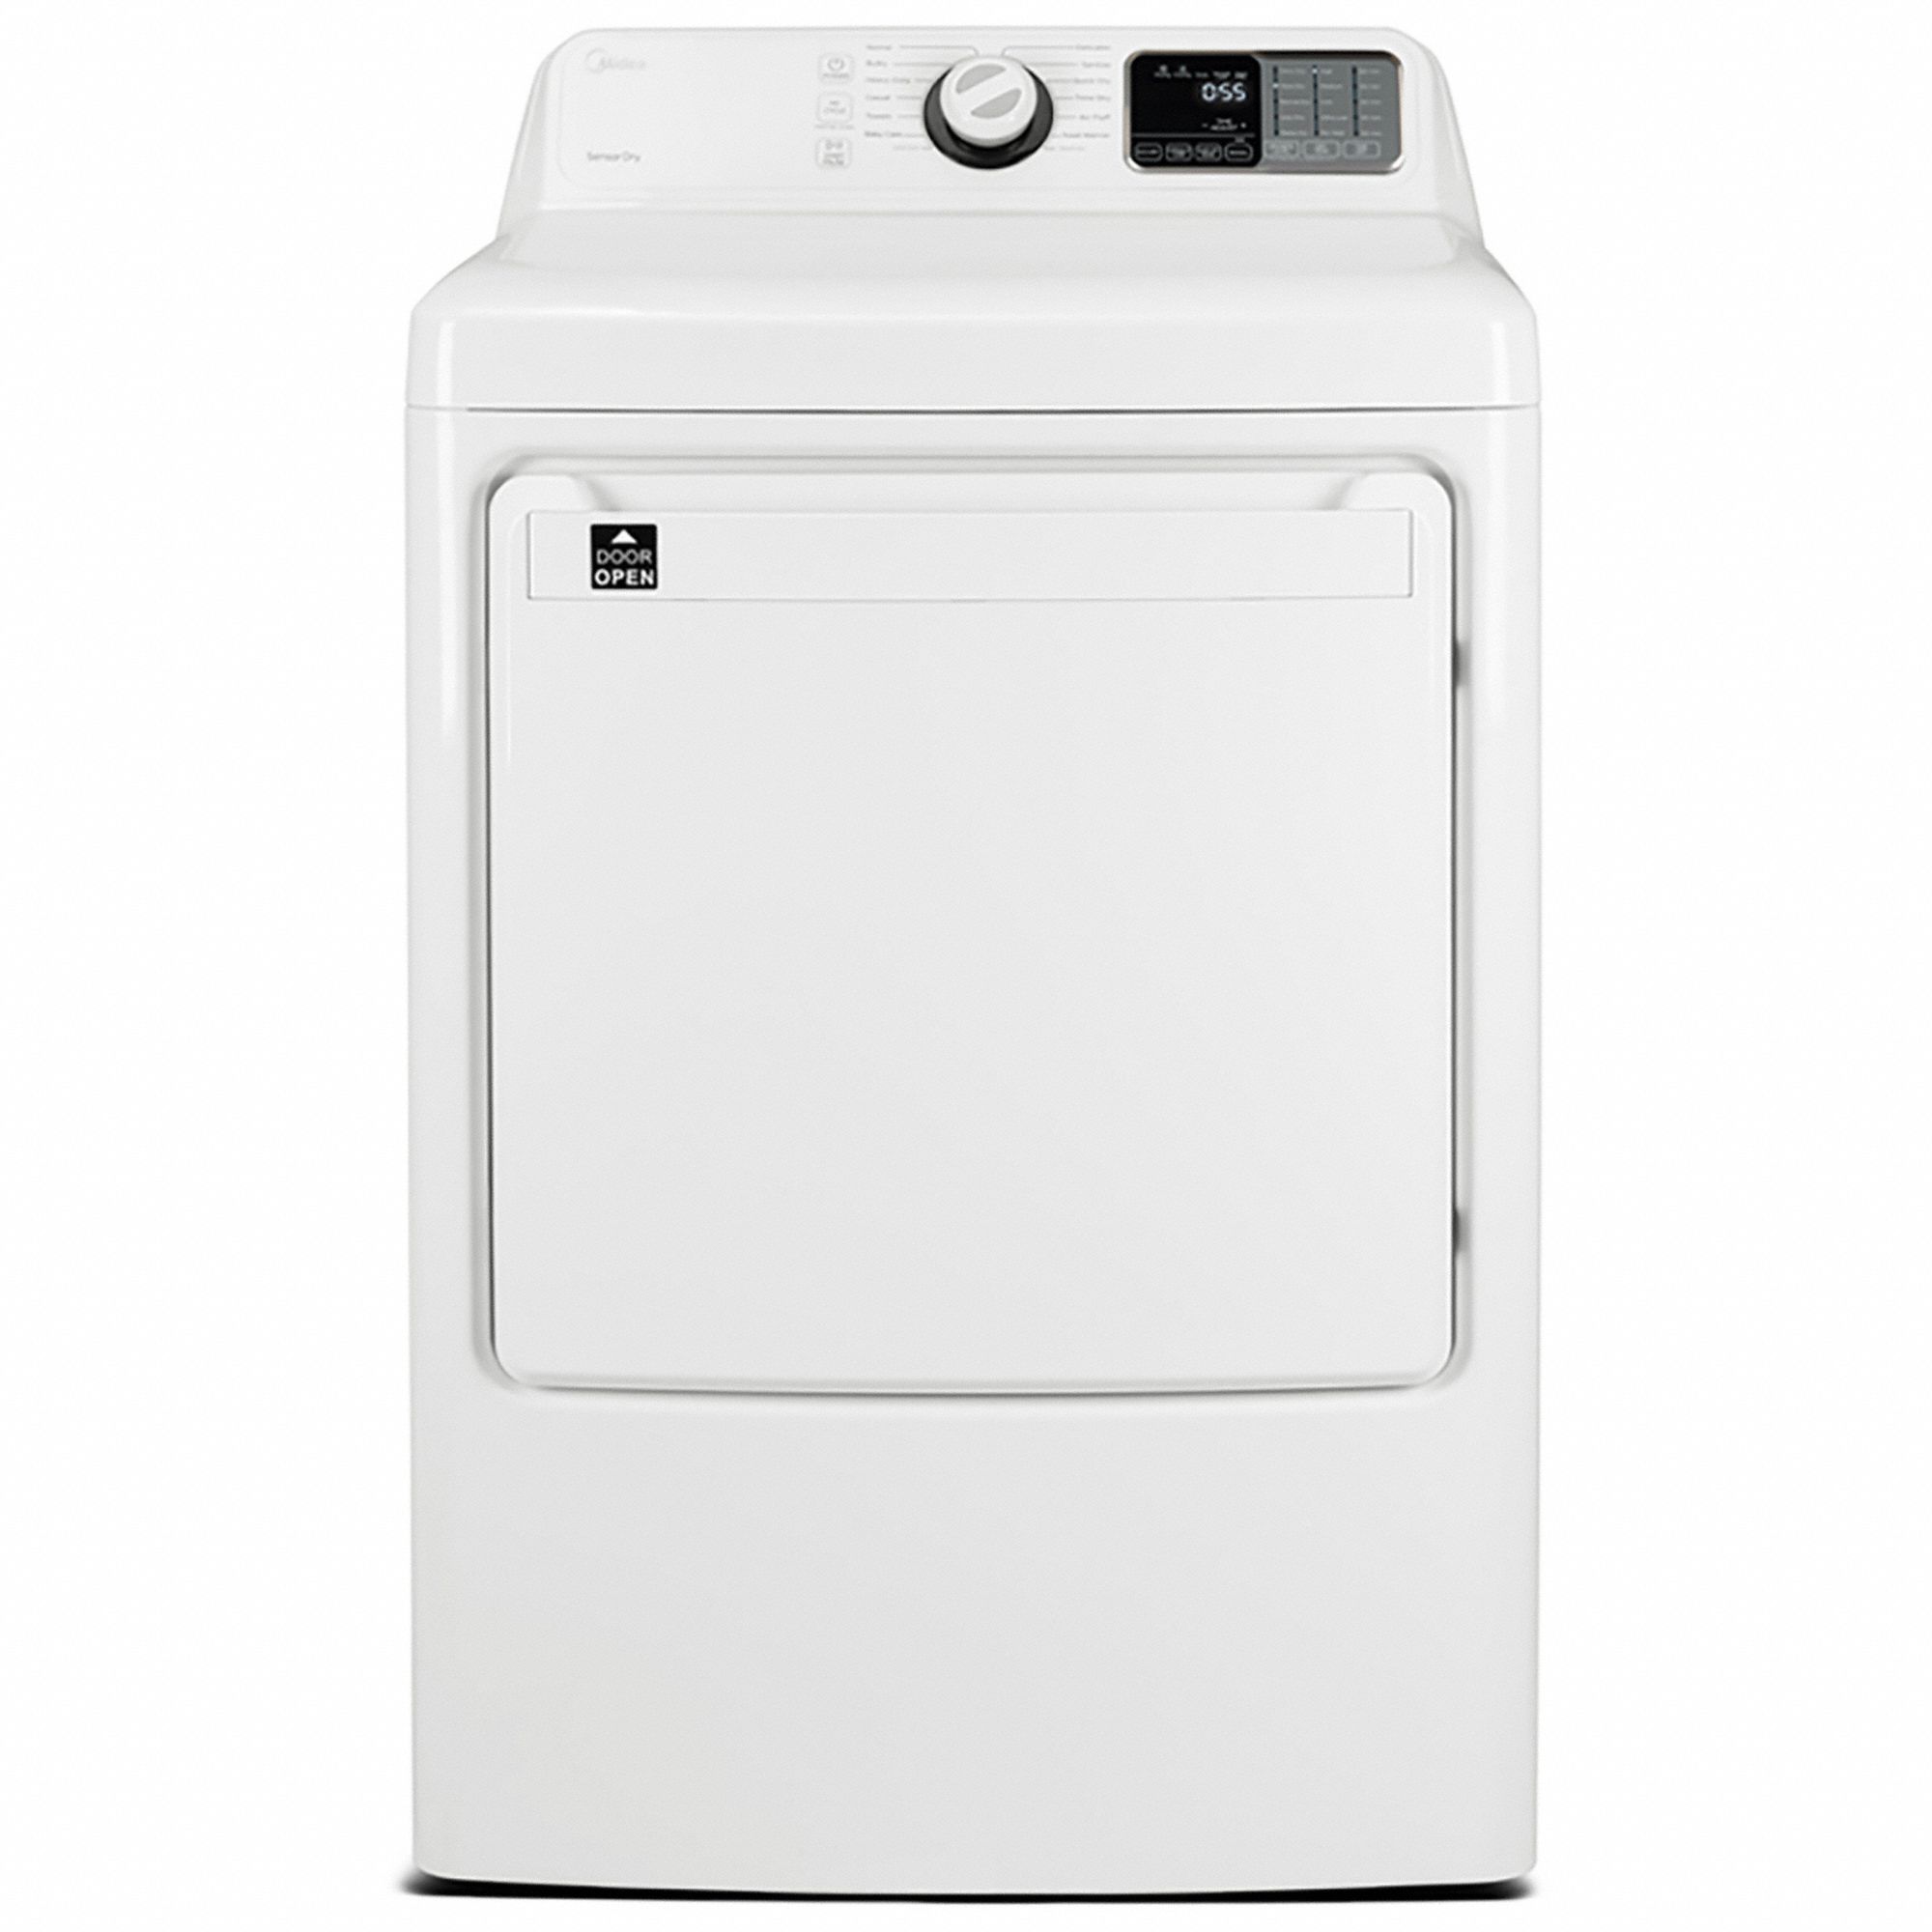 Dryer: Gas, White, 7.5 cu ft Capacity